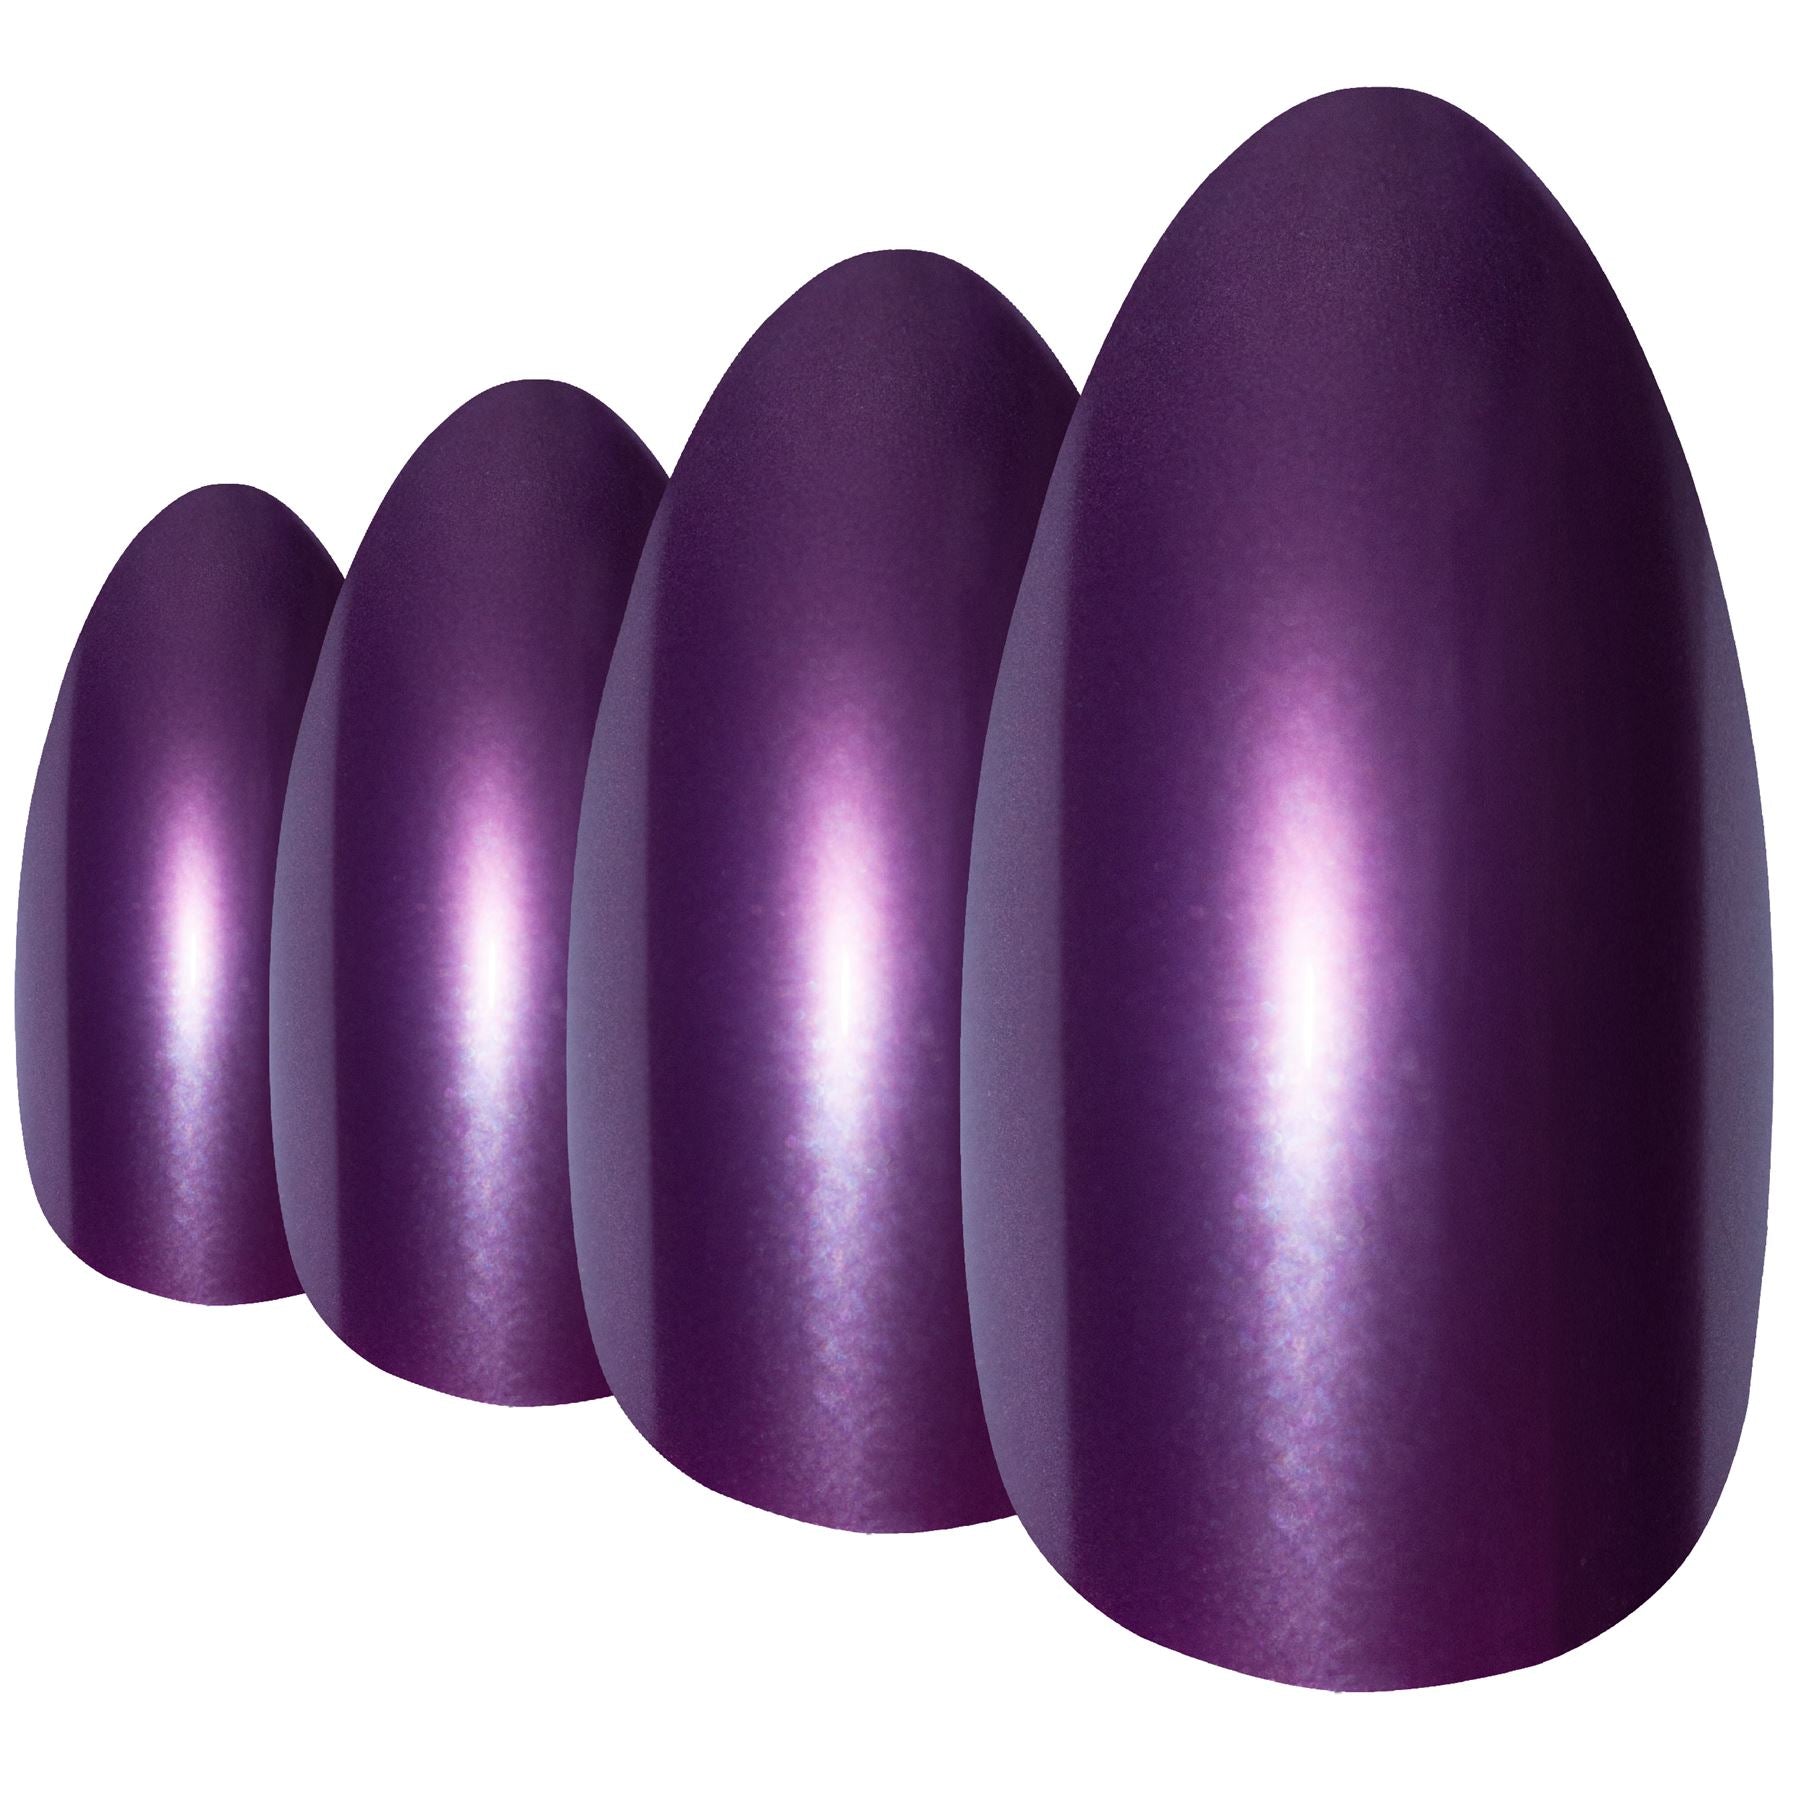 False Nails by Bling Art Purple Polished Almond Stiletto Long Fake Acrylic Tips